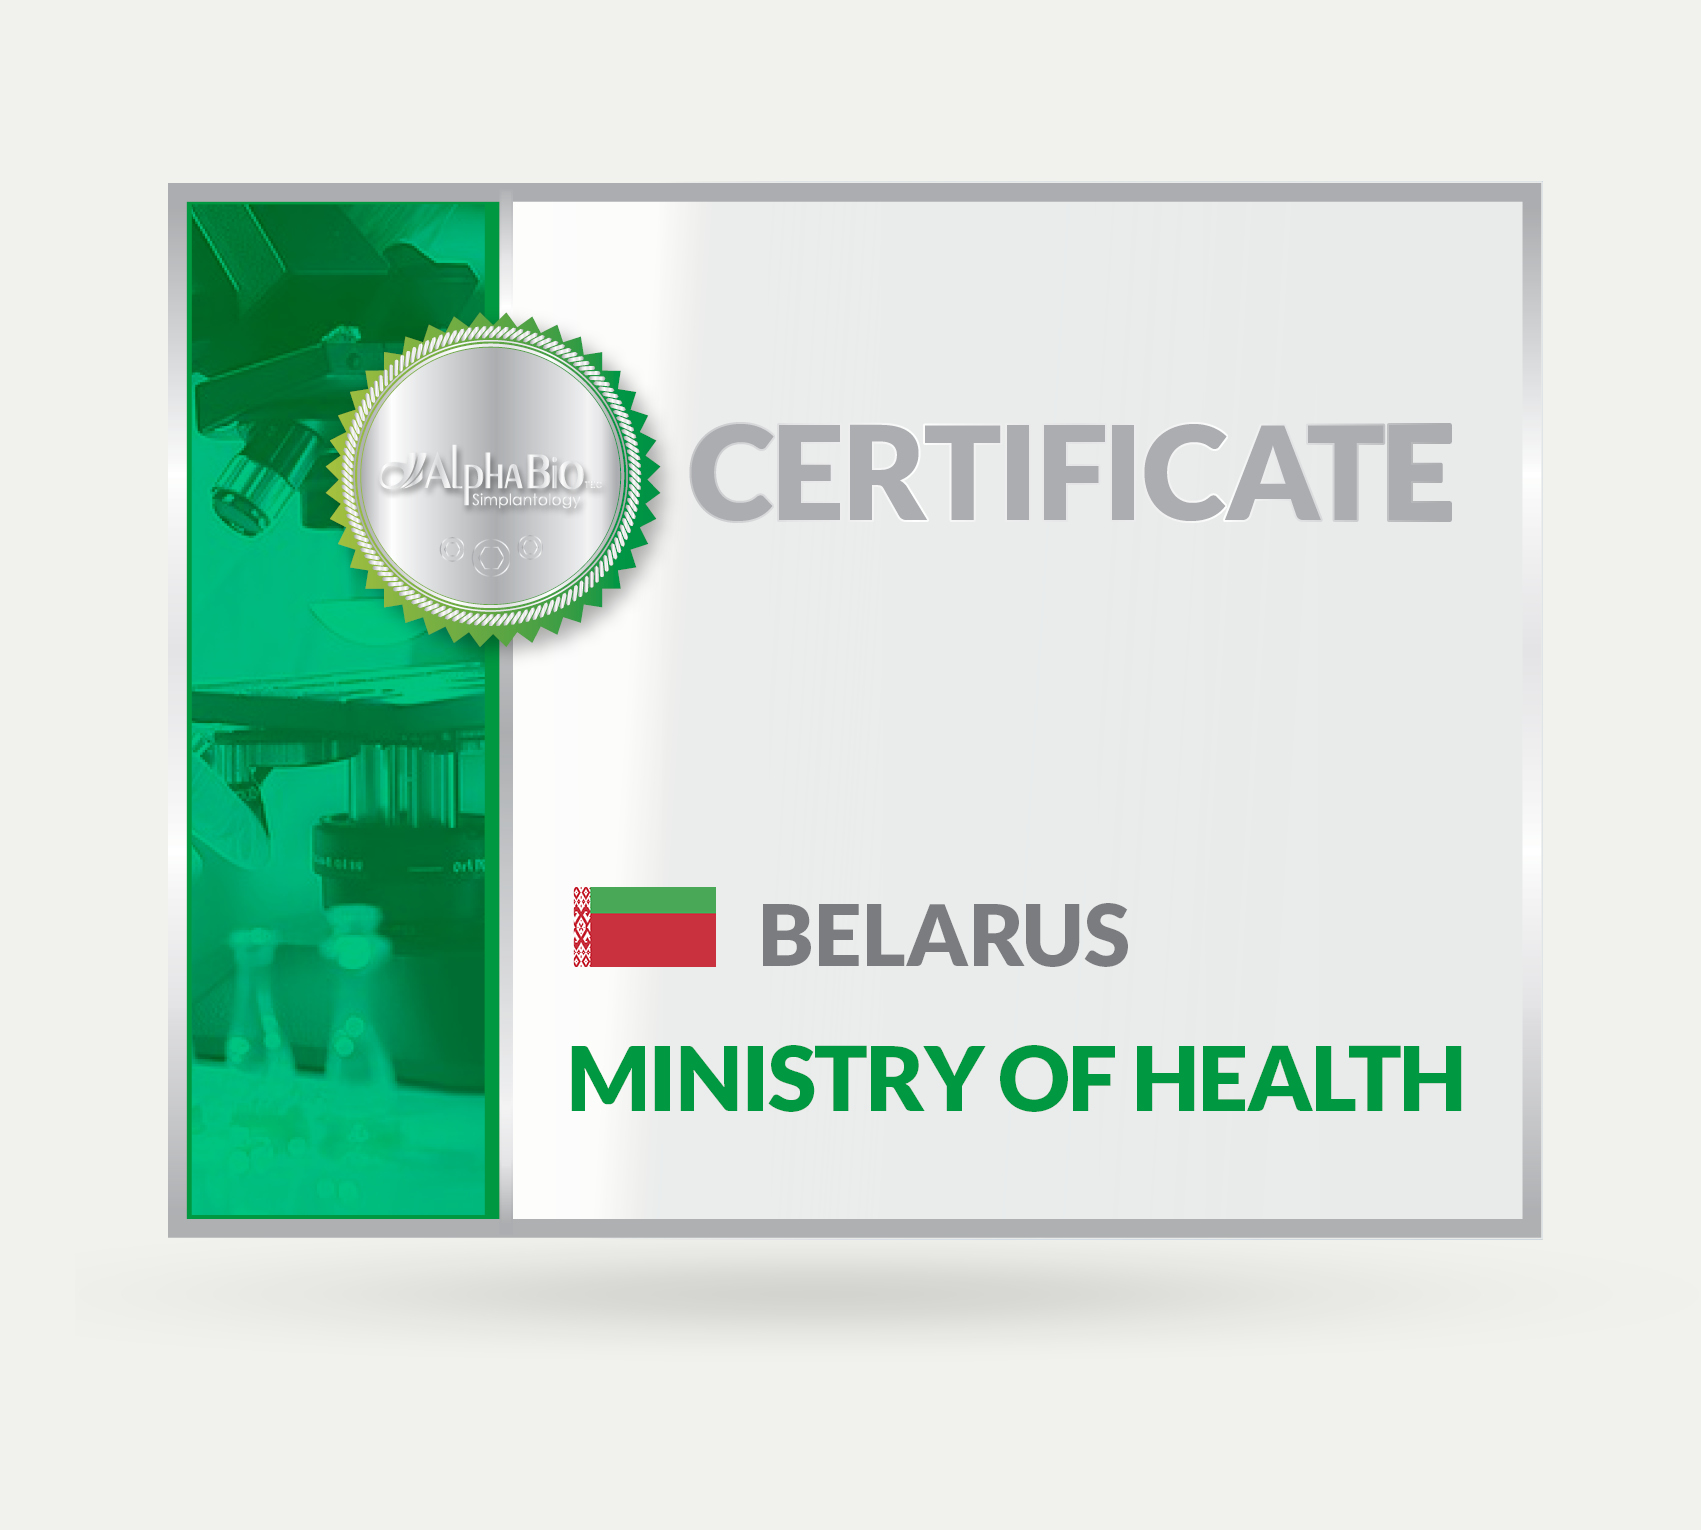 Certificate_Belarus - Alpha Bio Tec